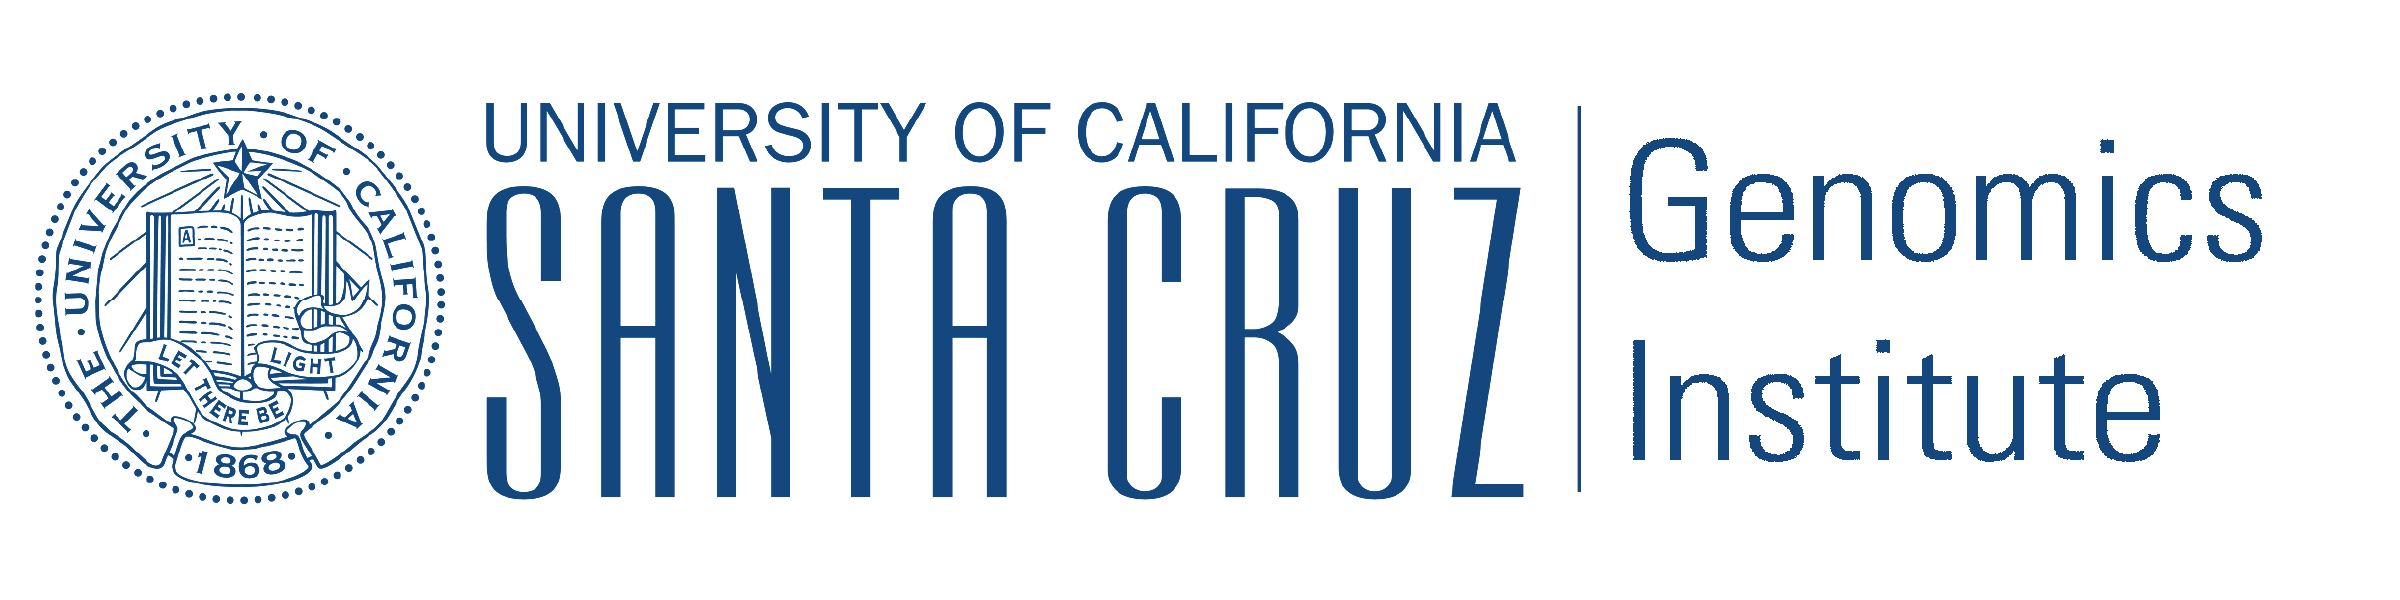 UC Santa Cruz Logo - Genomics Institute - UC Santa Cruz - Genomics Institute